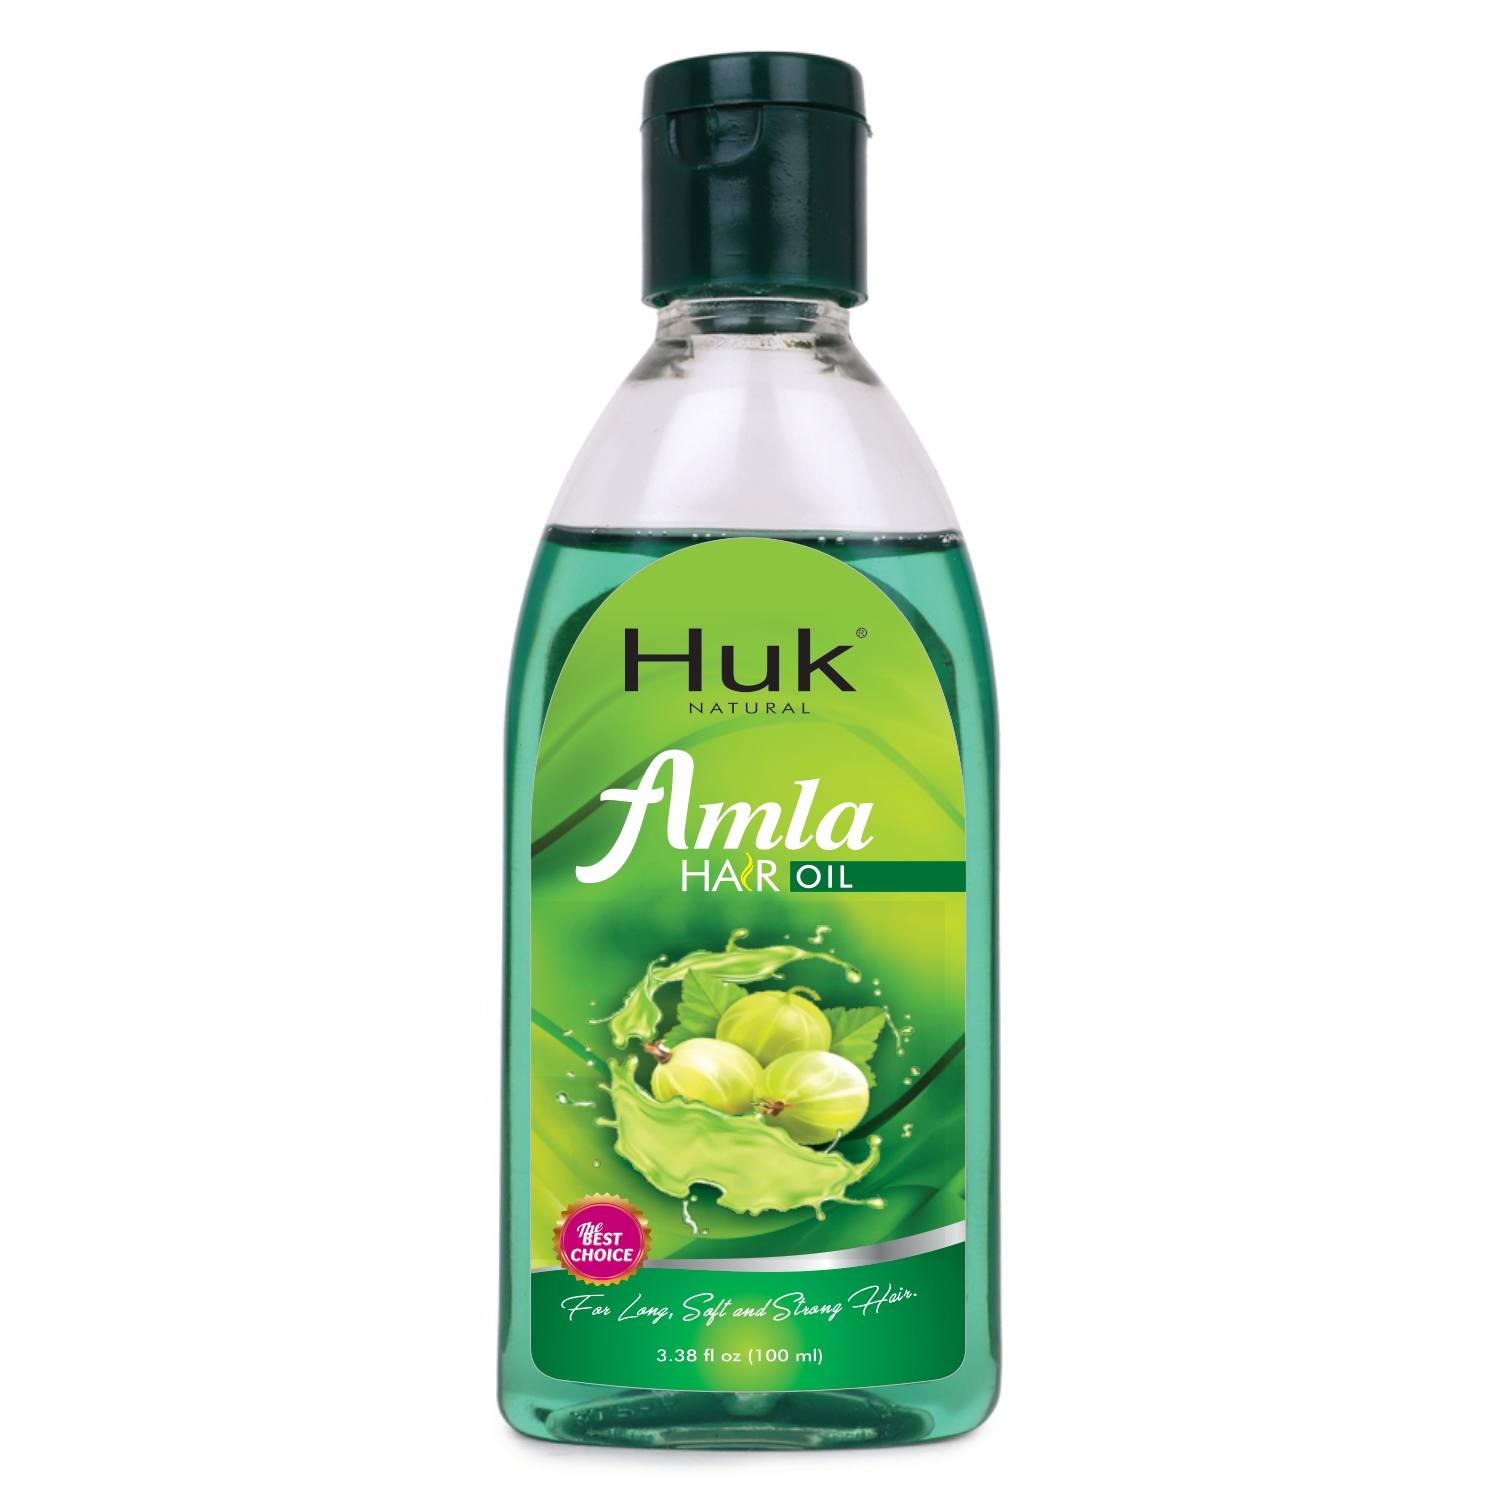 Huk Amla Hair Oil from Huk